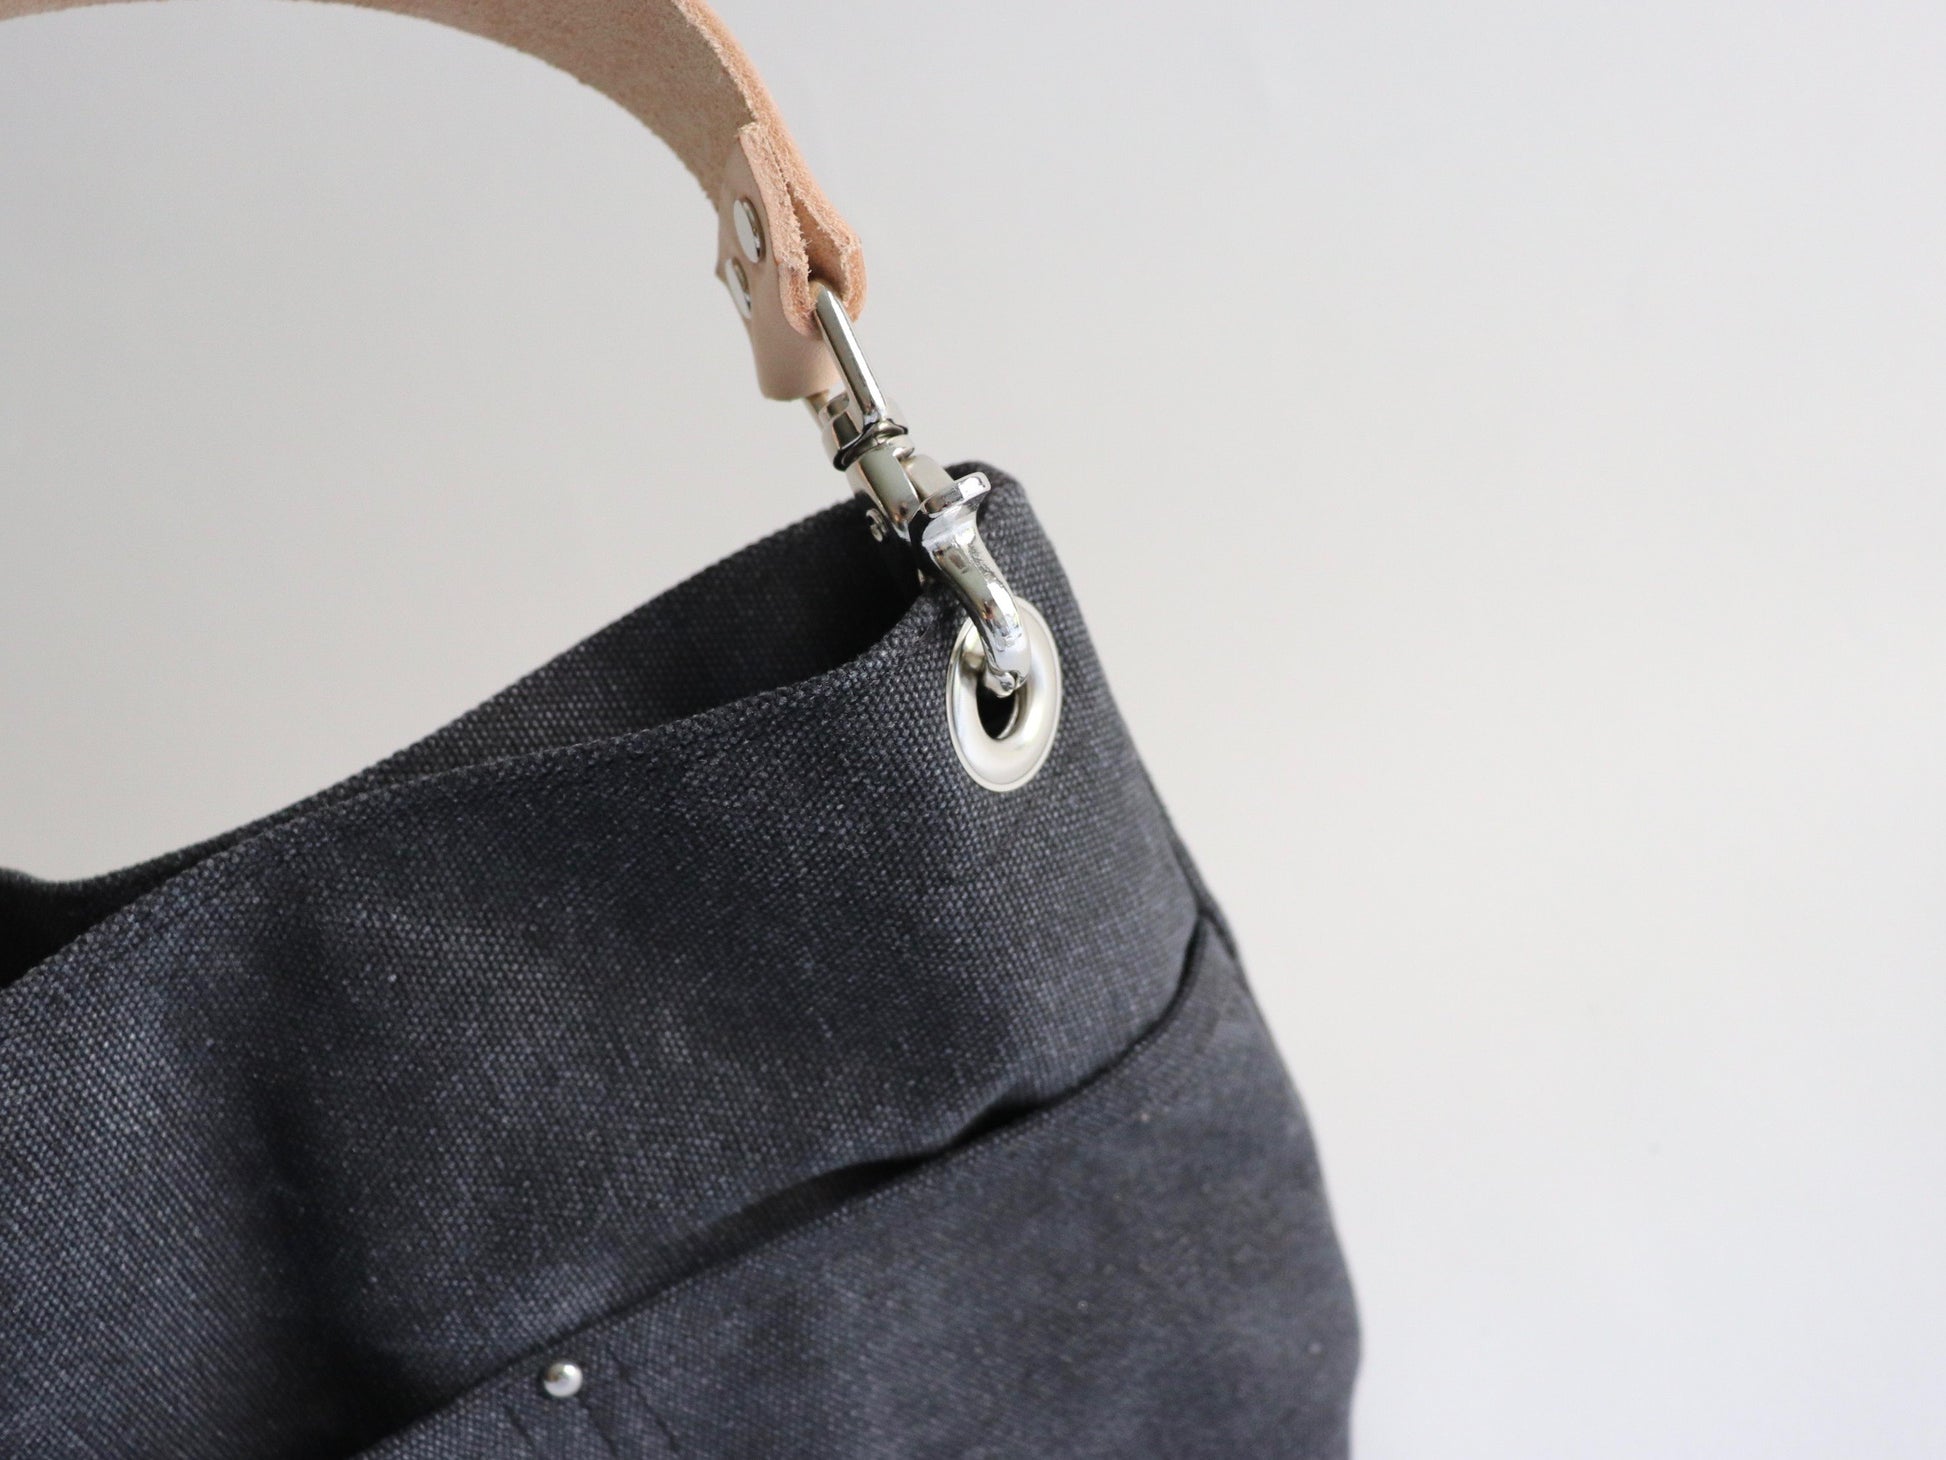 Custom Replacement Straps & Handles for Chanel Handbags/Purses